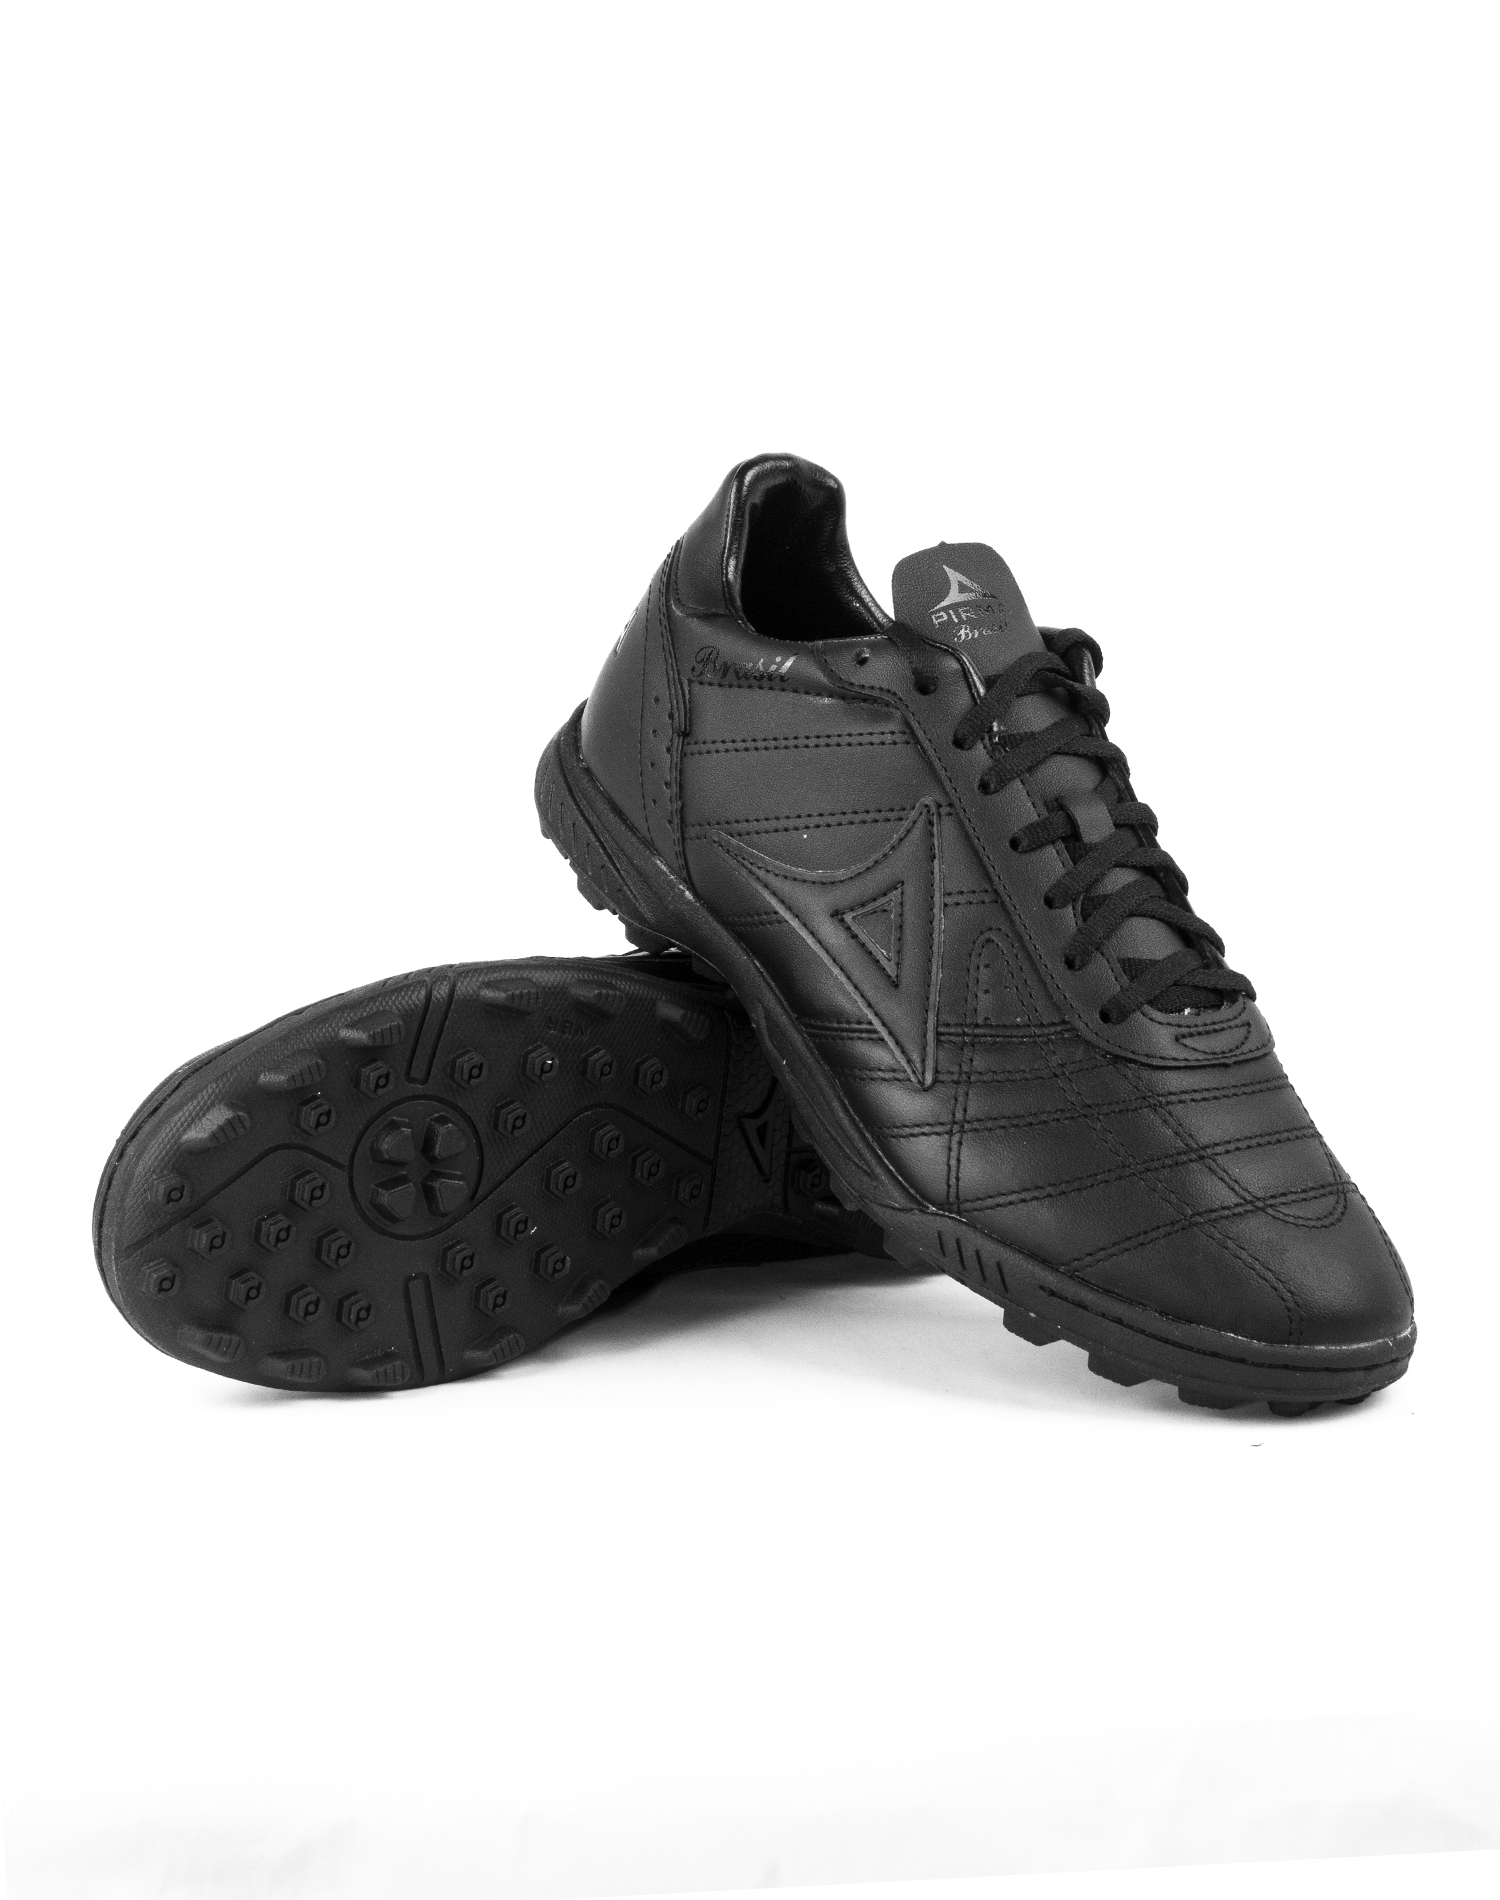 Zapatos de Futbol Rapido Pirma Turf Negro - Golero Sport